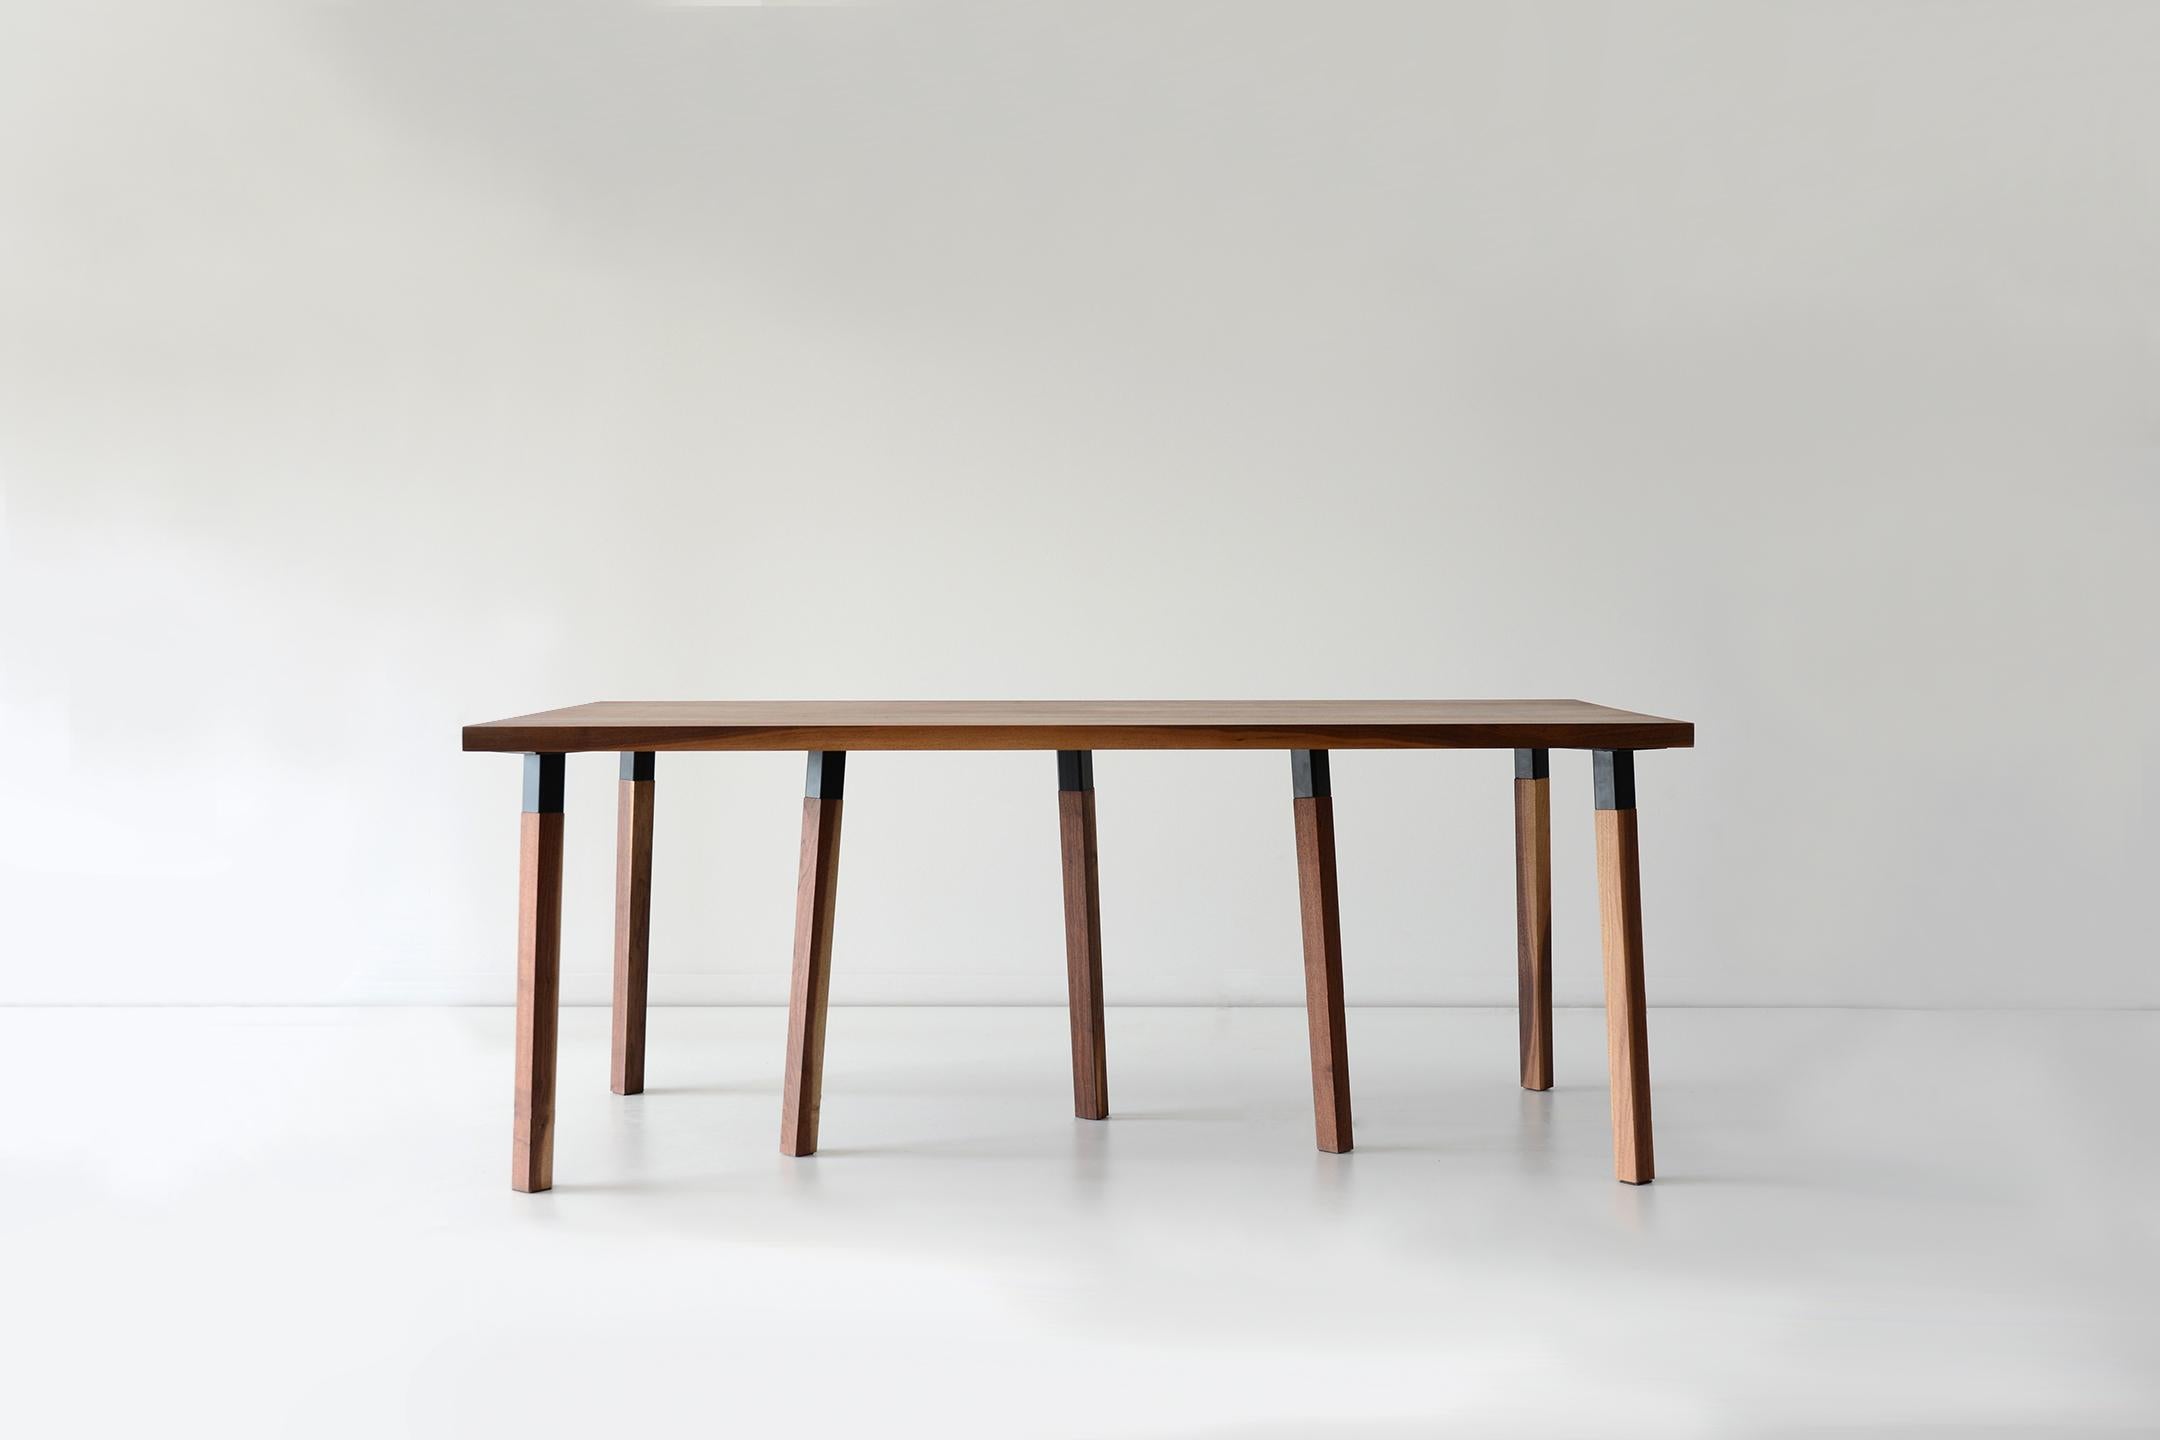 Oak large pier dining table by Hollis & Morris
Dimensions: 102